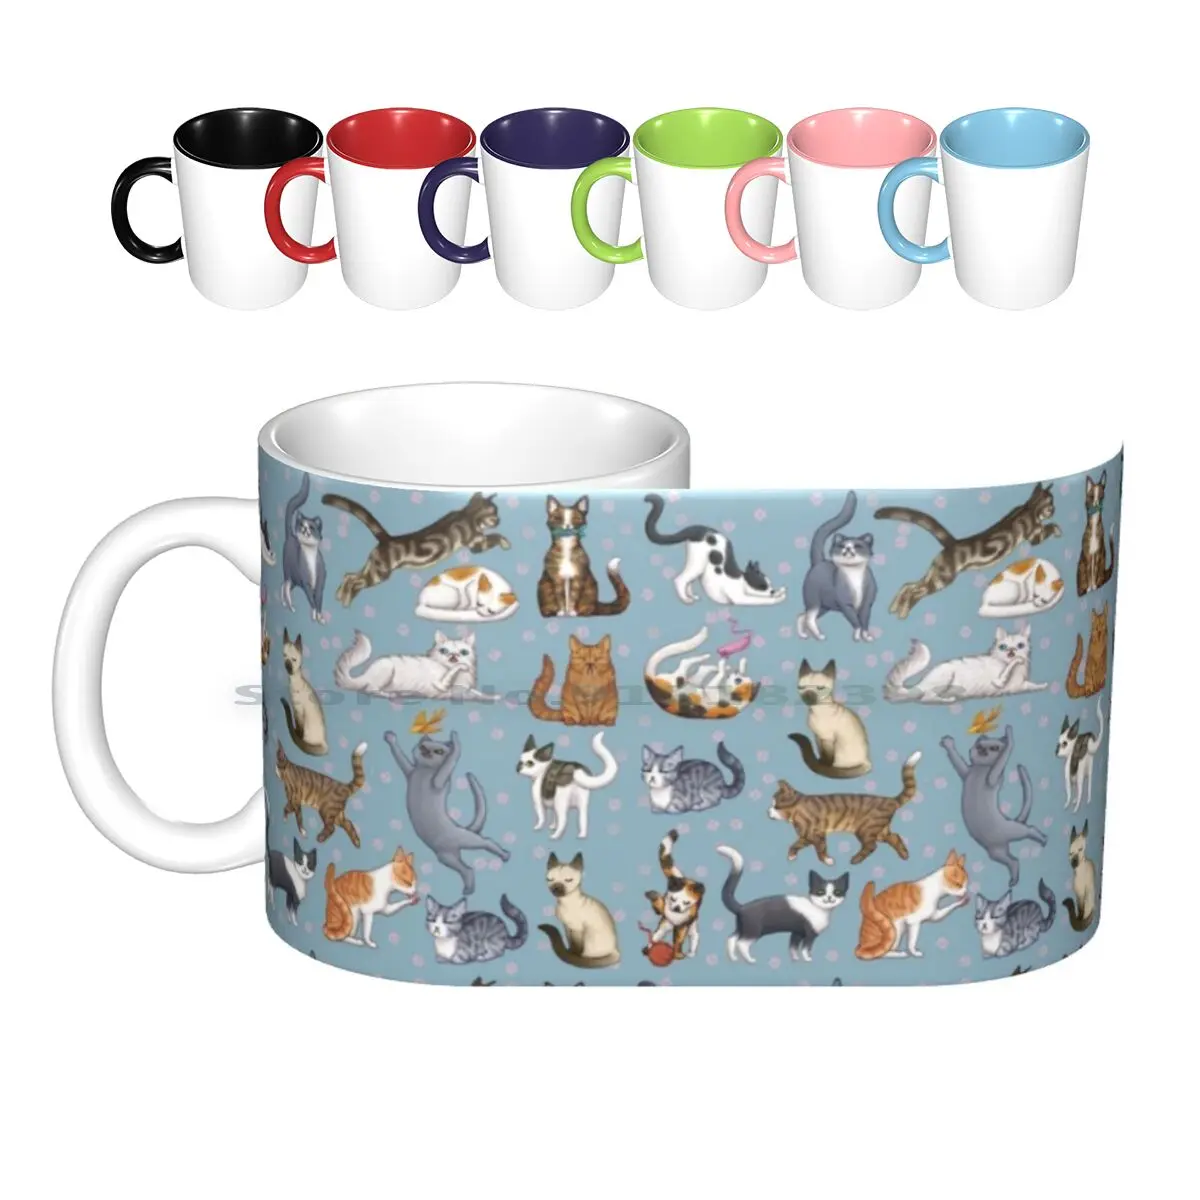 16 Cats Ceramic Mugs Coffee Cups Milk Tea Mug Cat Cute Kitten Tabby Animal Pet Blue Creative Trending Vintage Gift Bottle Cup